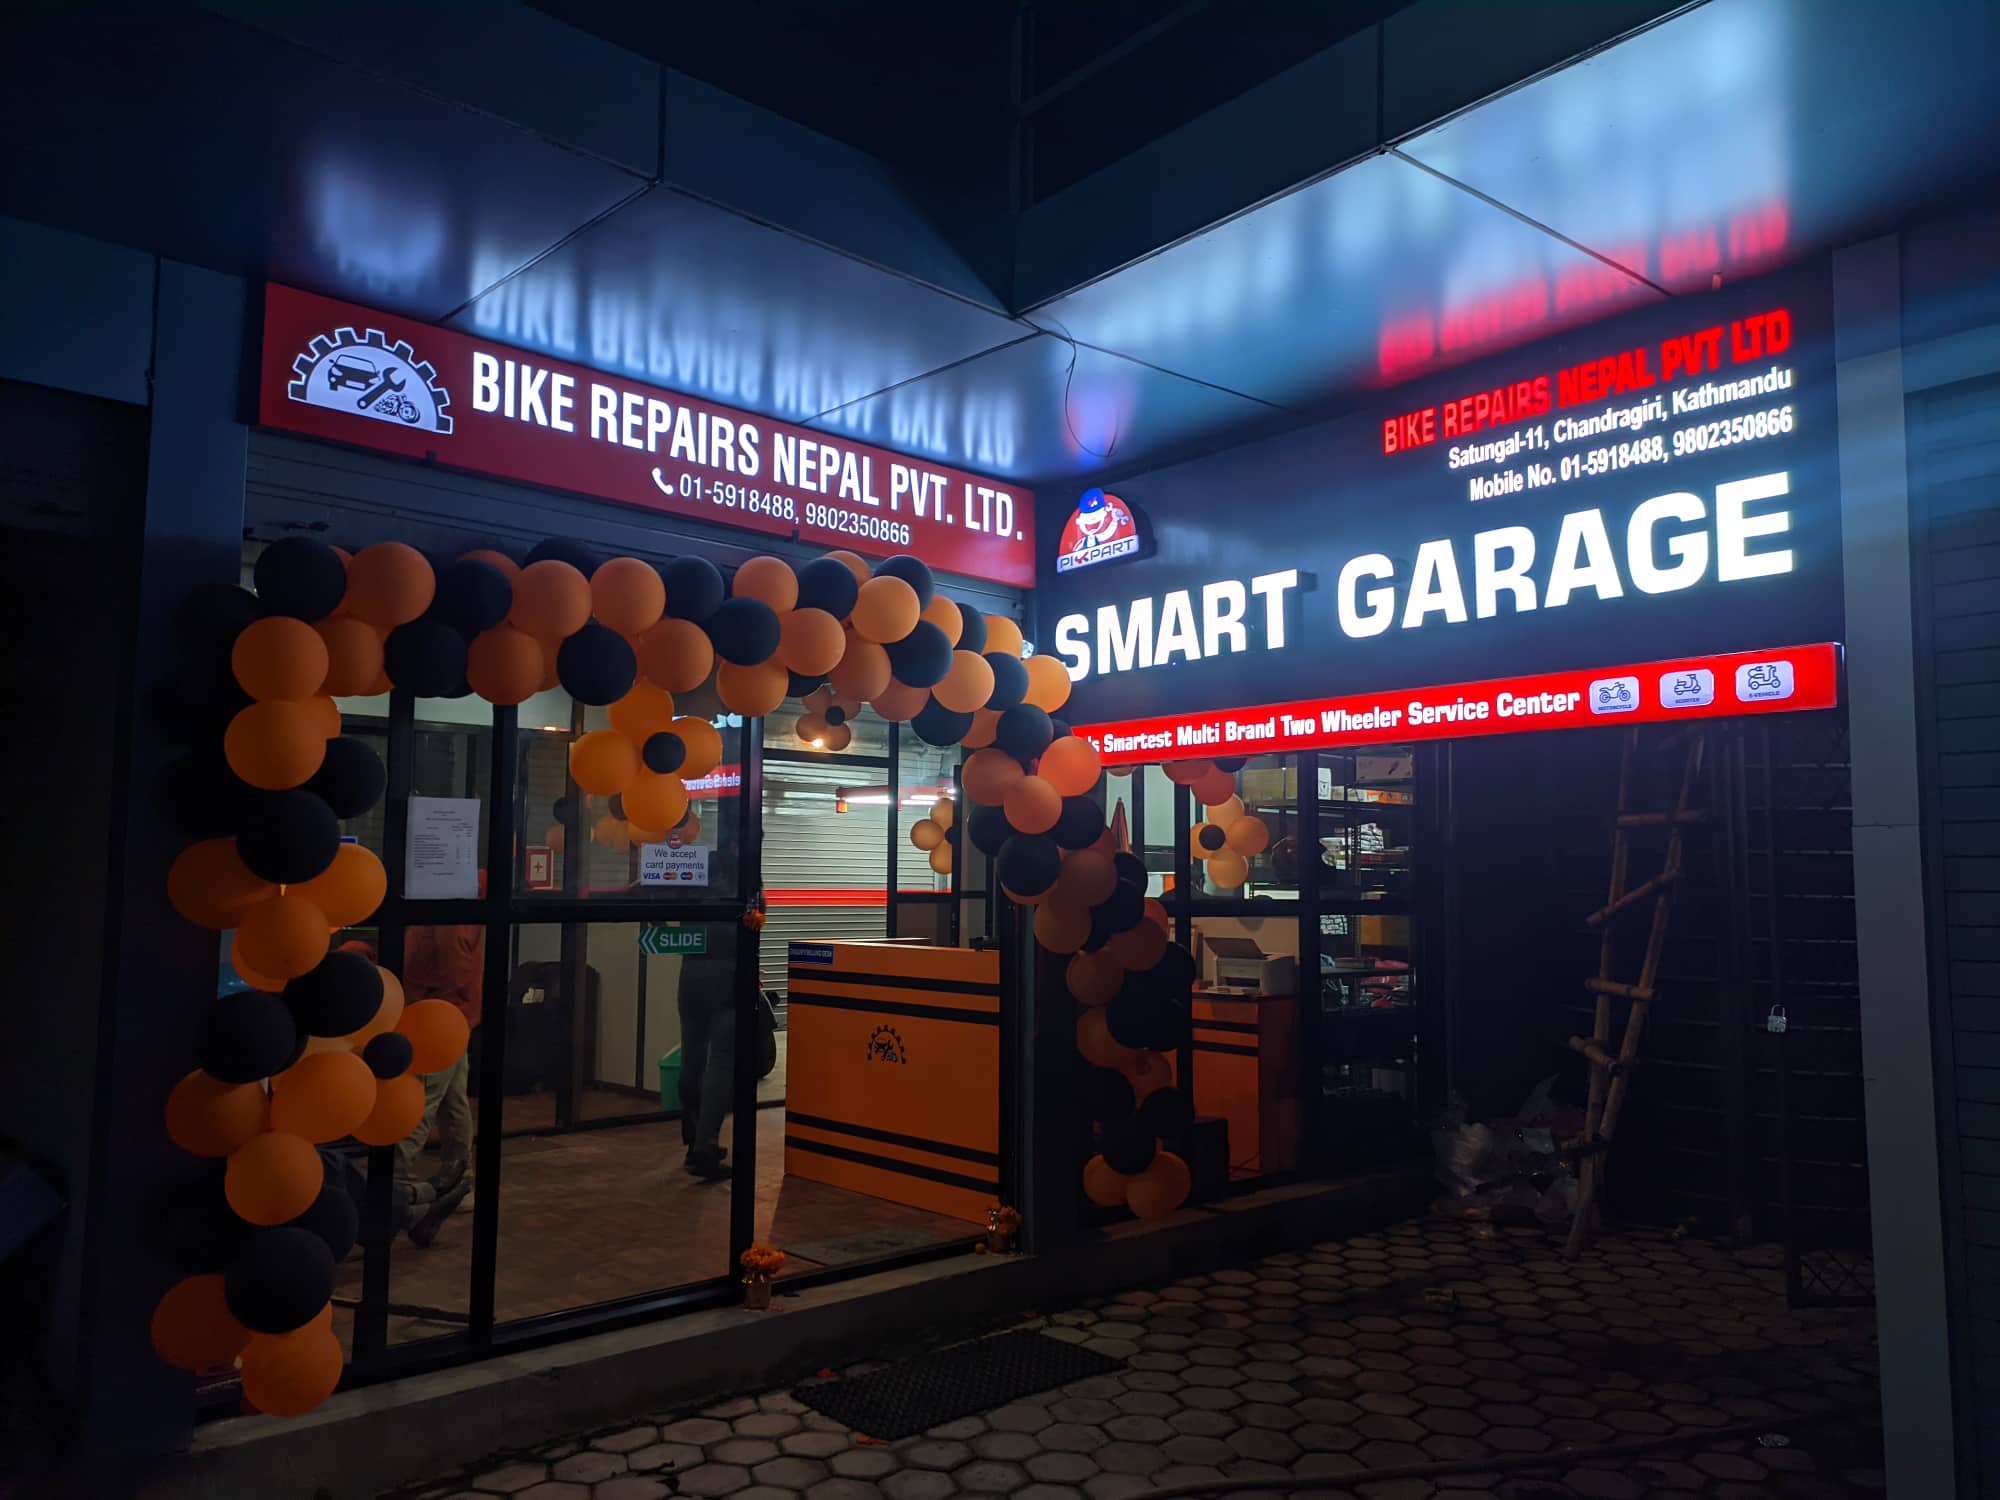 Smart Garage at Satungal, Kathmandu